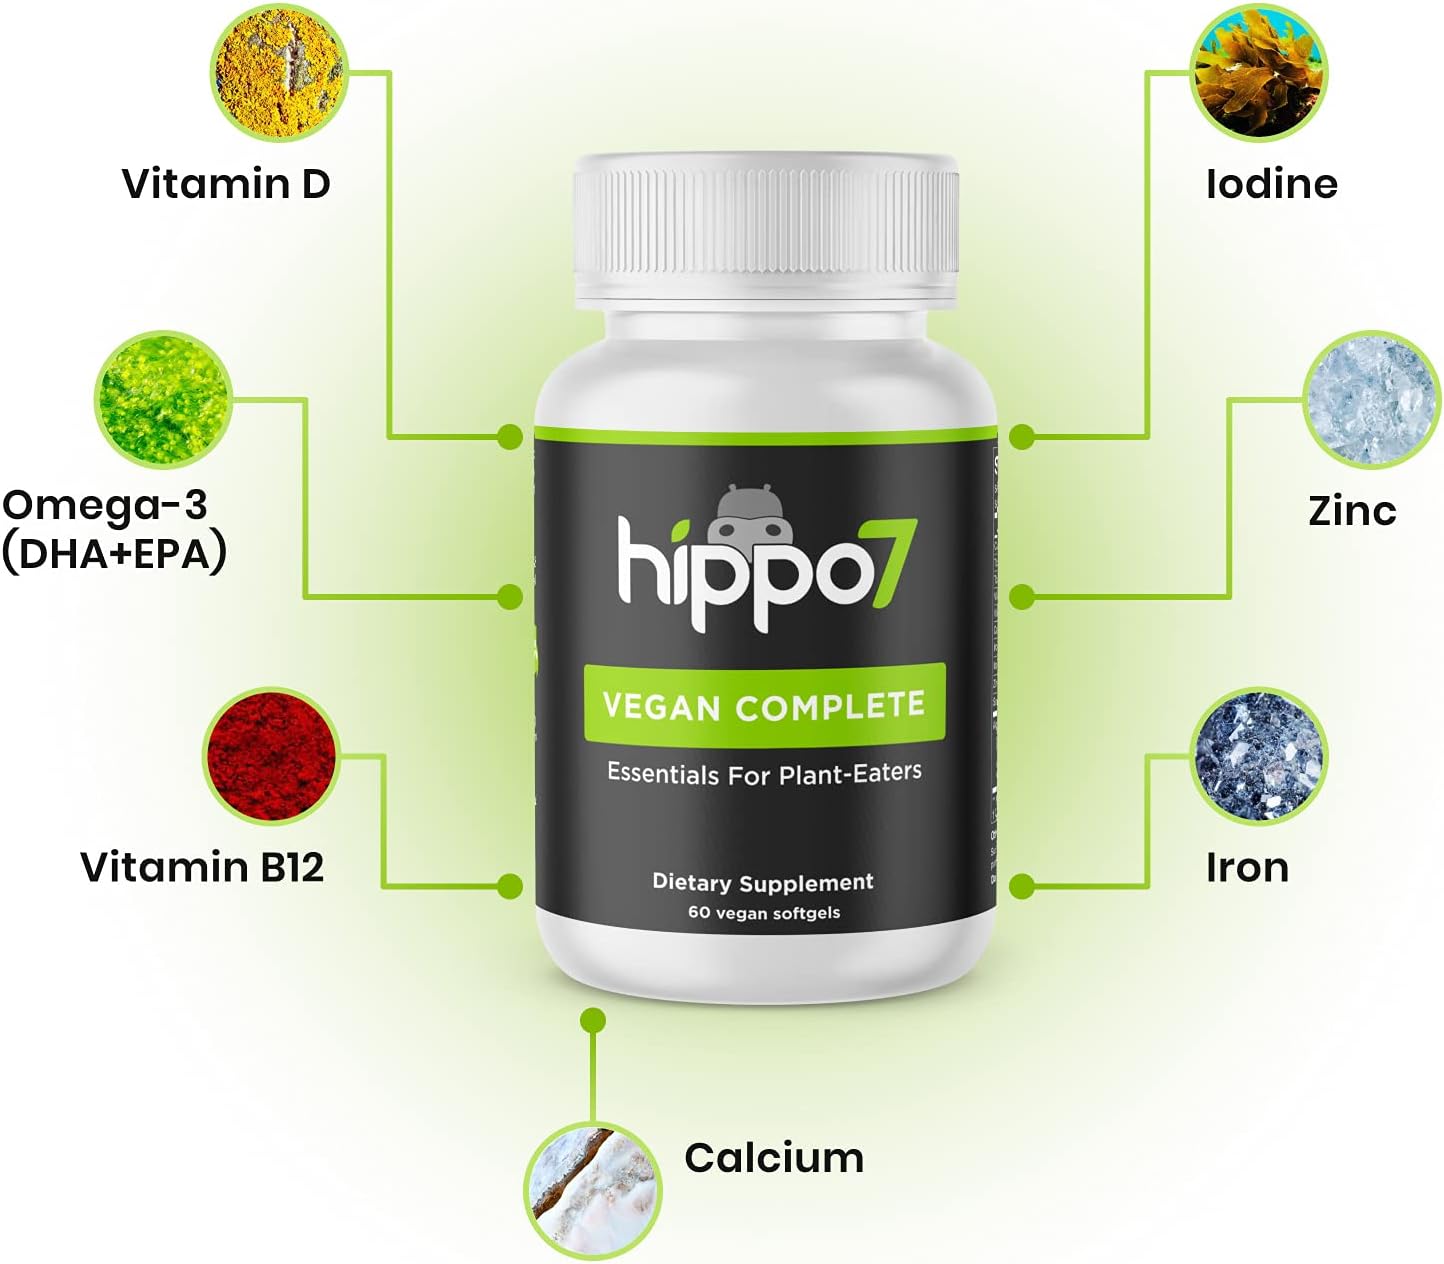 Hippo7 Vegan Complete Multivitamin Vitamin B12, Vitamin D, Omega-3 DHA+EPA, Calcium, Iodine, Zinc & Iron. (1 Bottle, 60 Softgels) : Health & Household